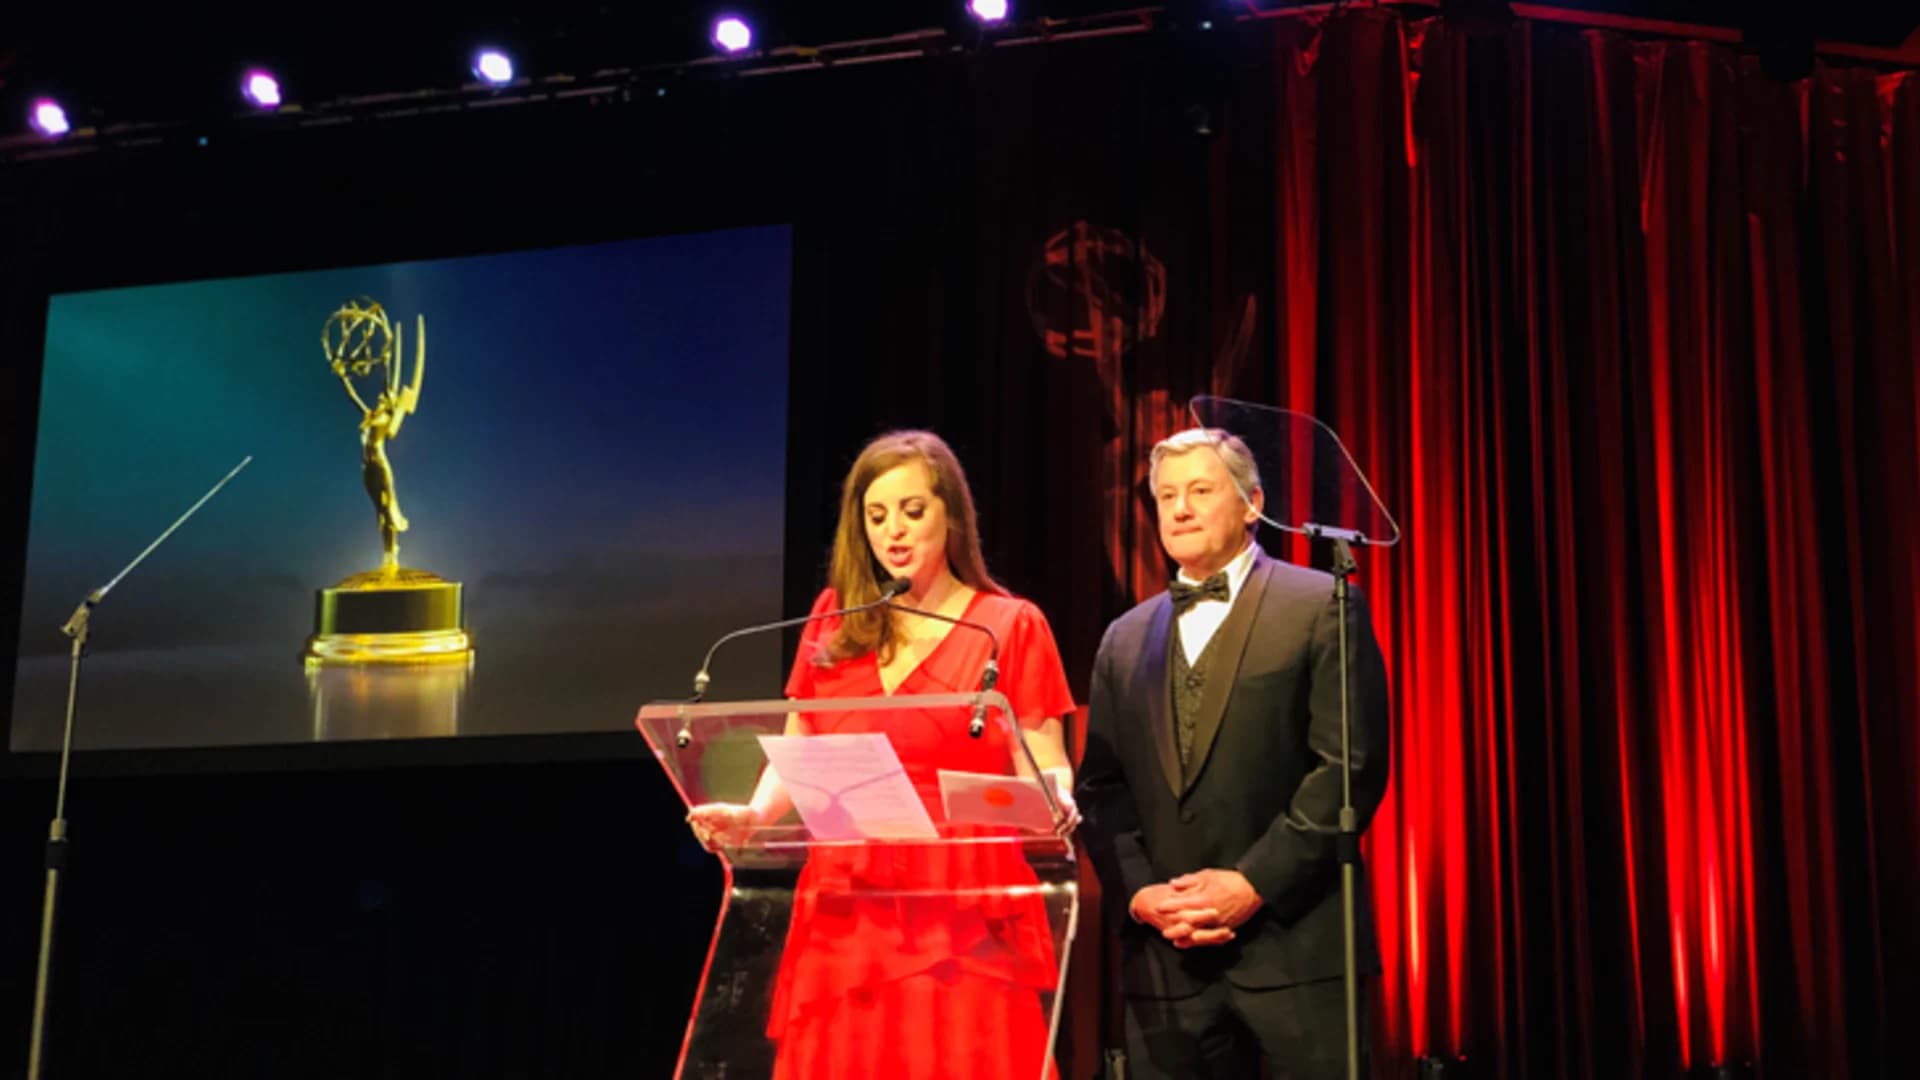 News 12 Networks win 16 New York Emmy awards